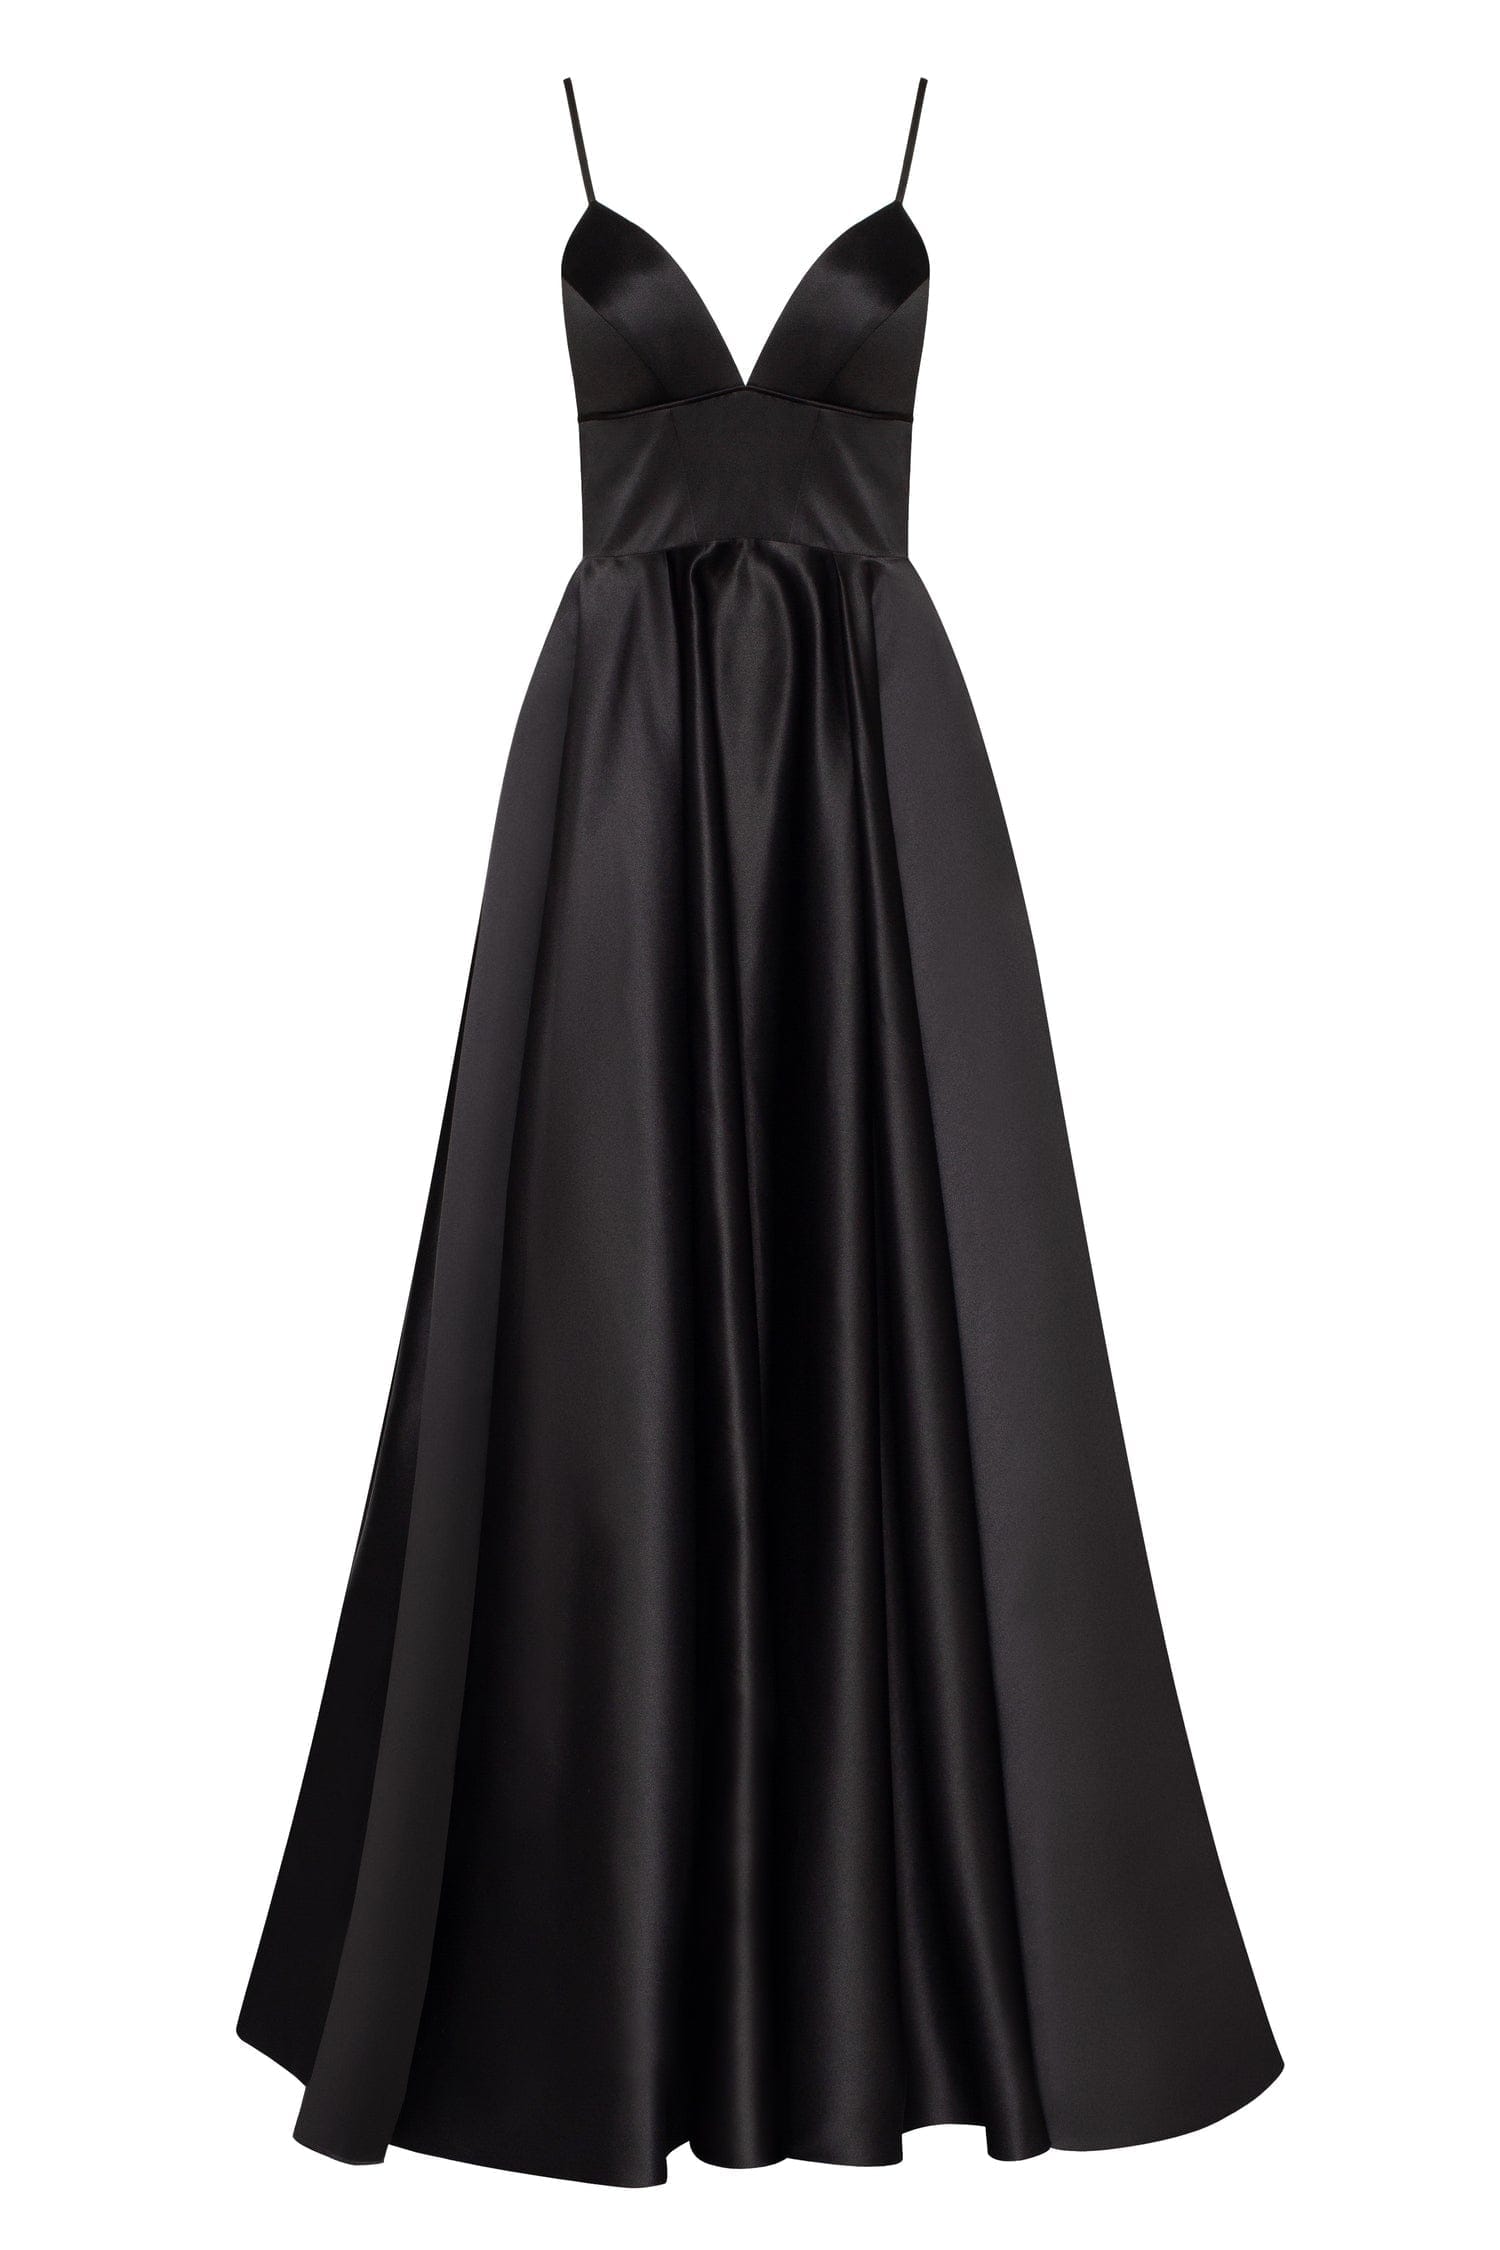 Black Off-the-Shoulder Spaghetti Straps Split Front Evening Prom Dress |  LizProm